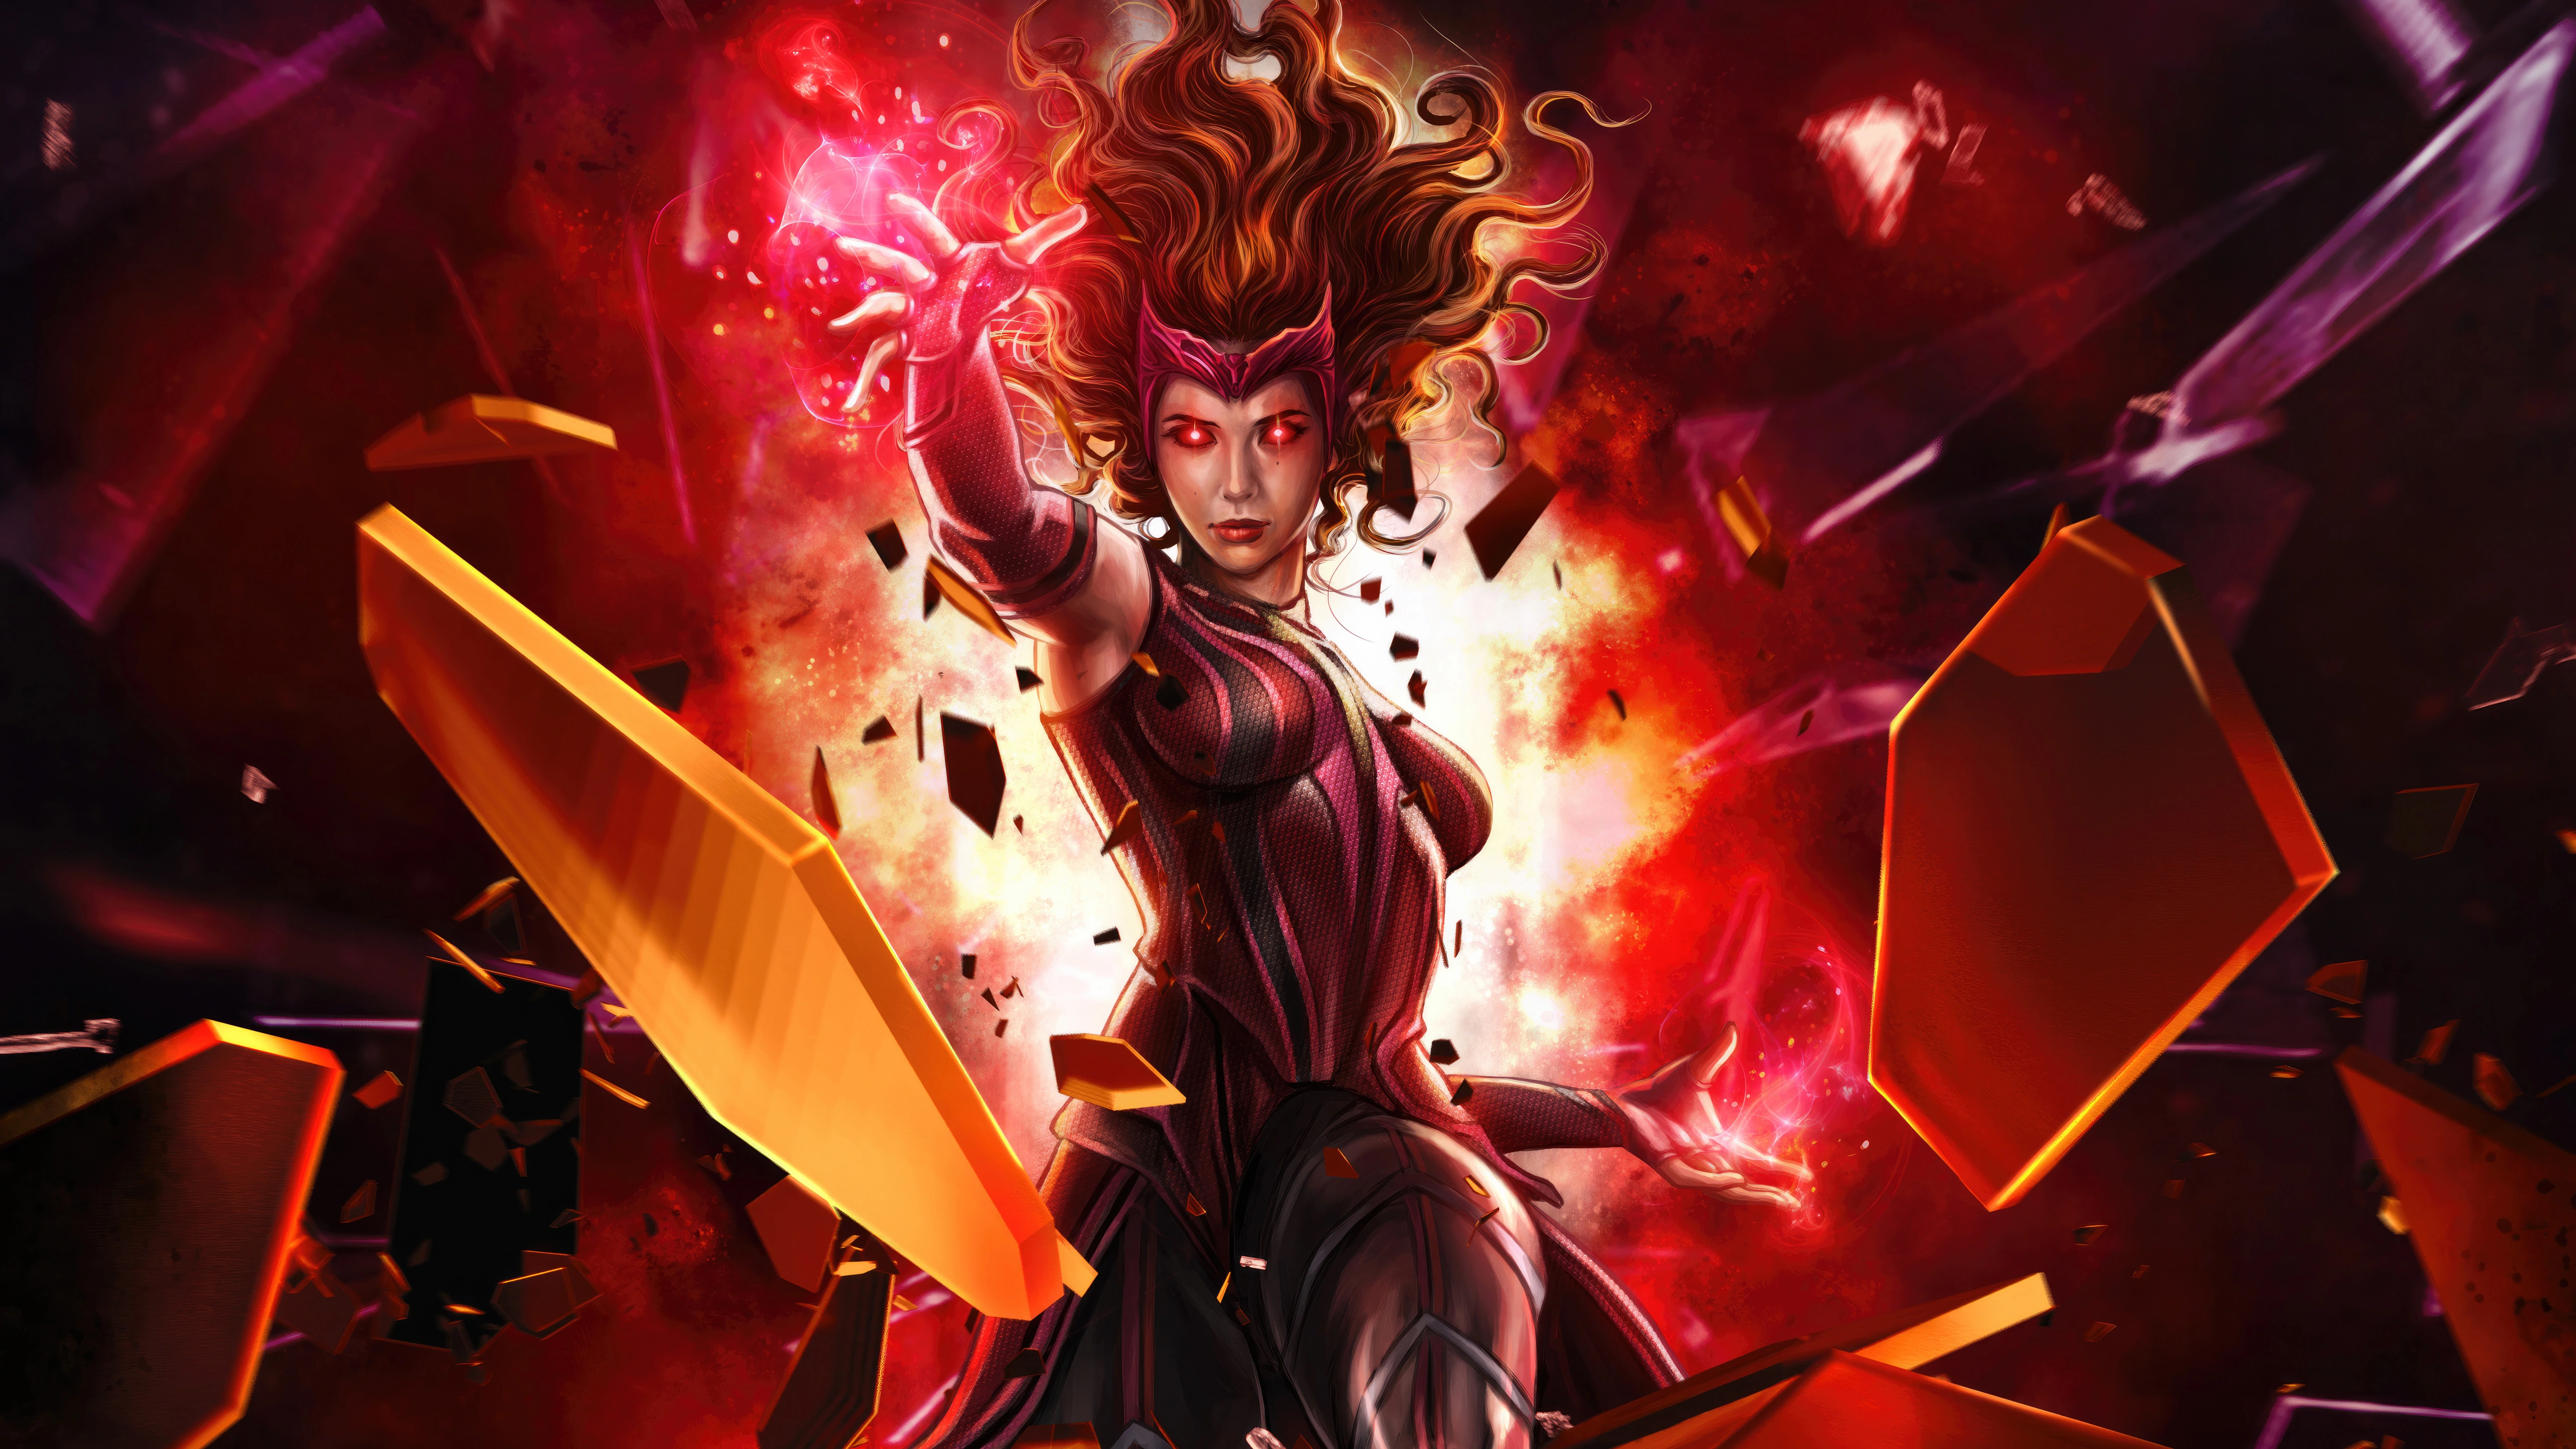 scarlet witch unleashing chaos magic vx.jpg